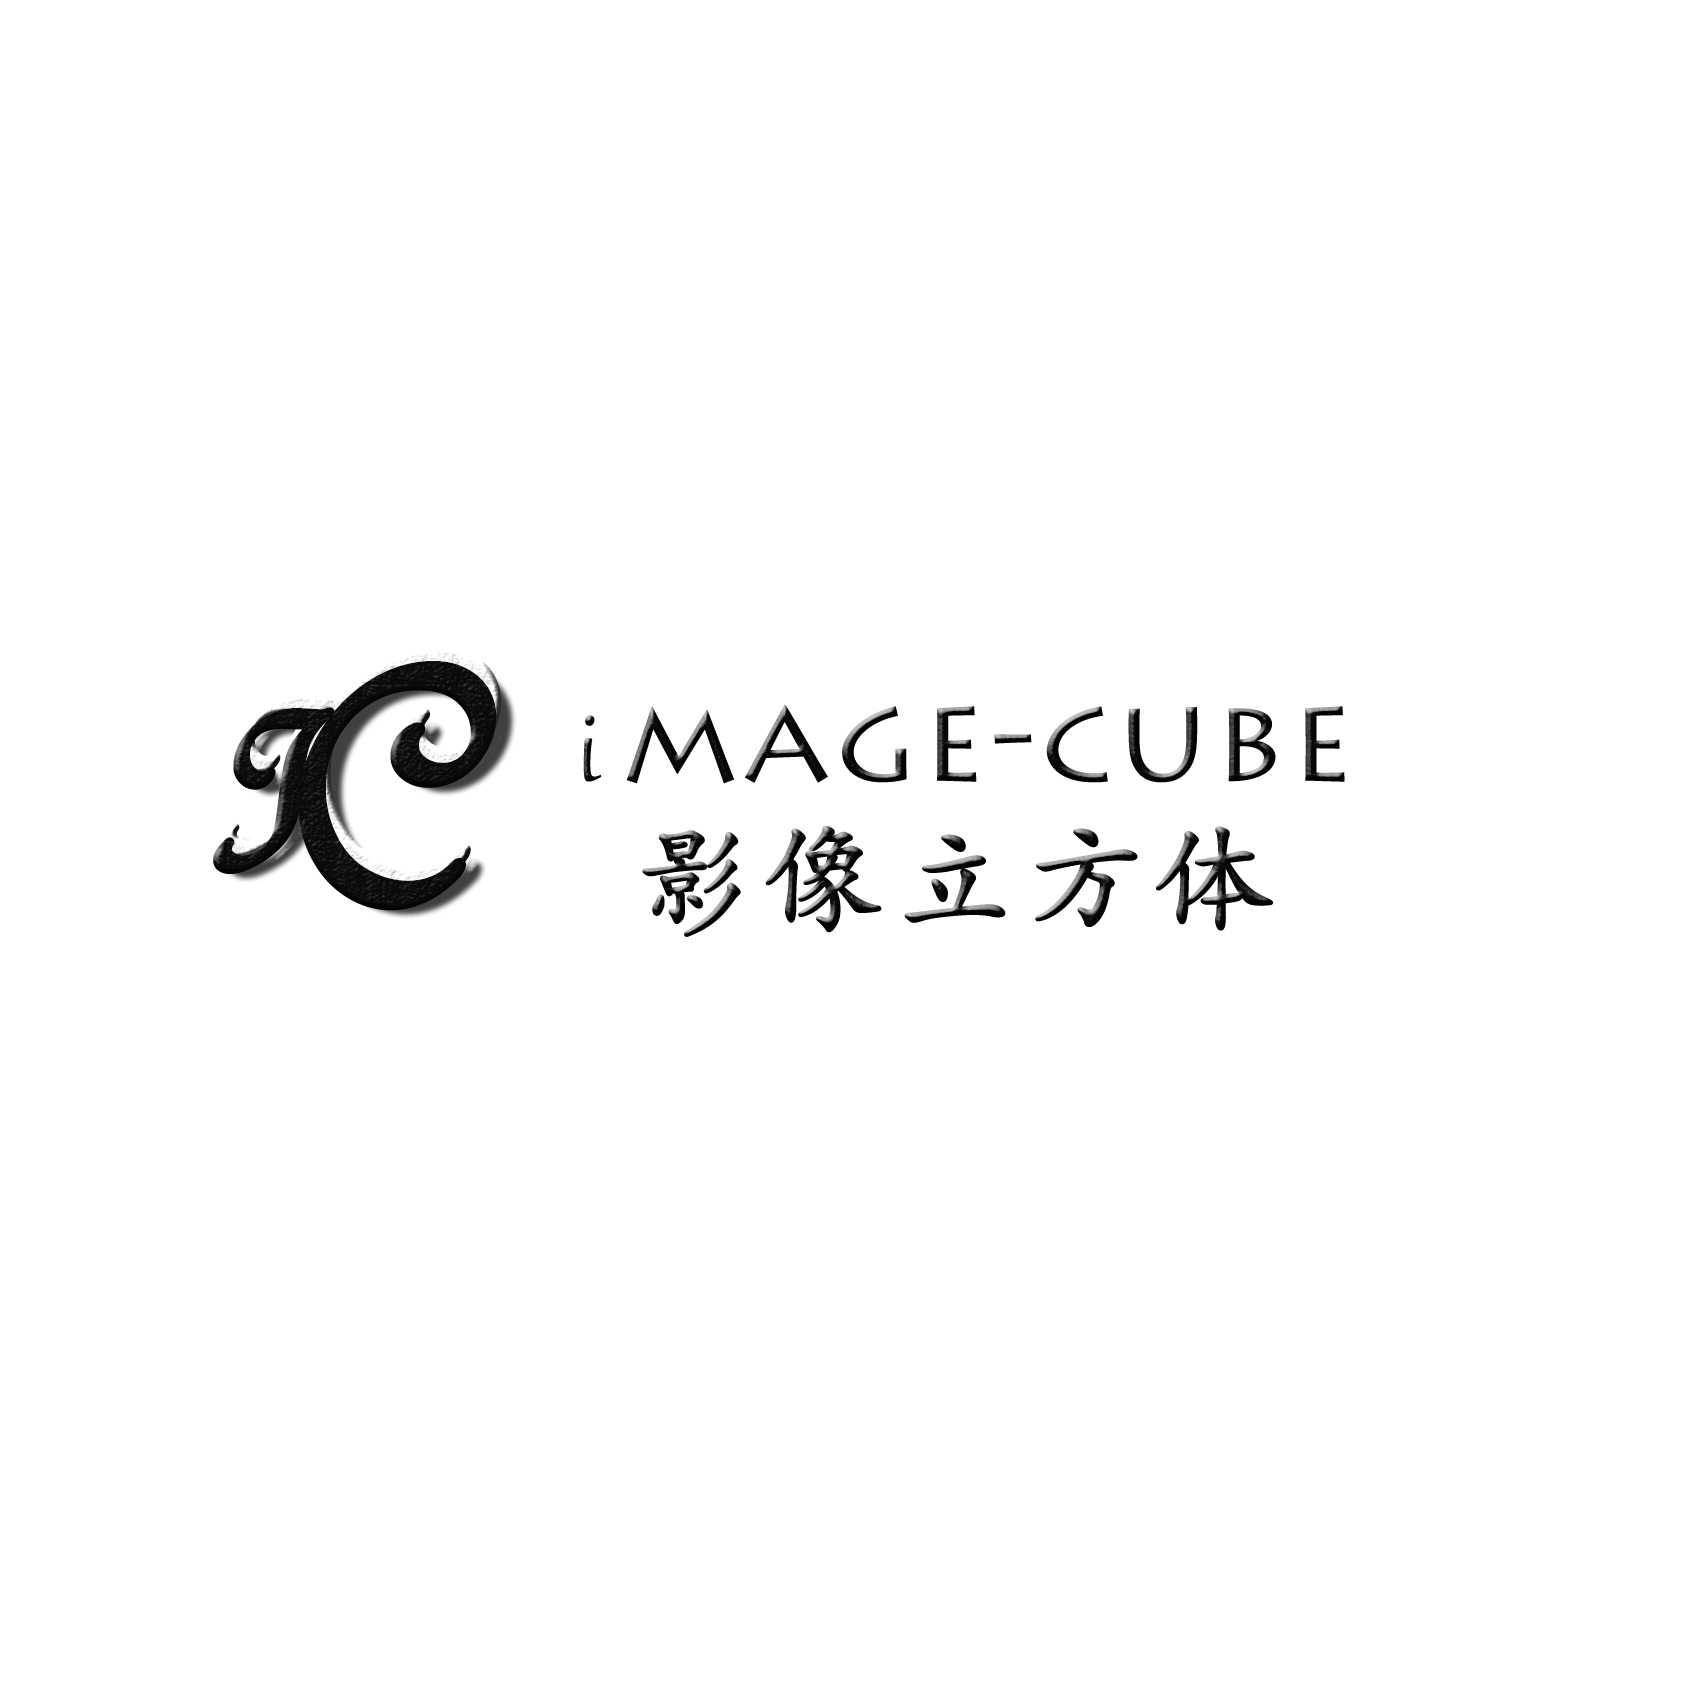 iMage Cube 影像立方體